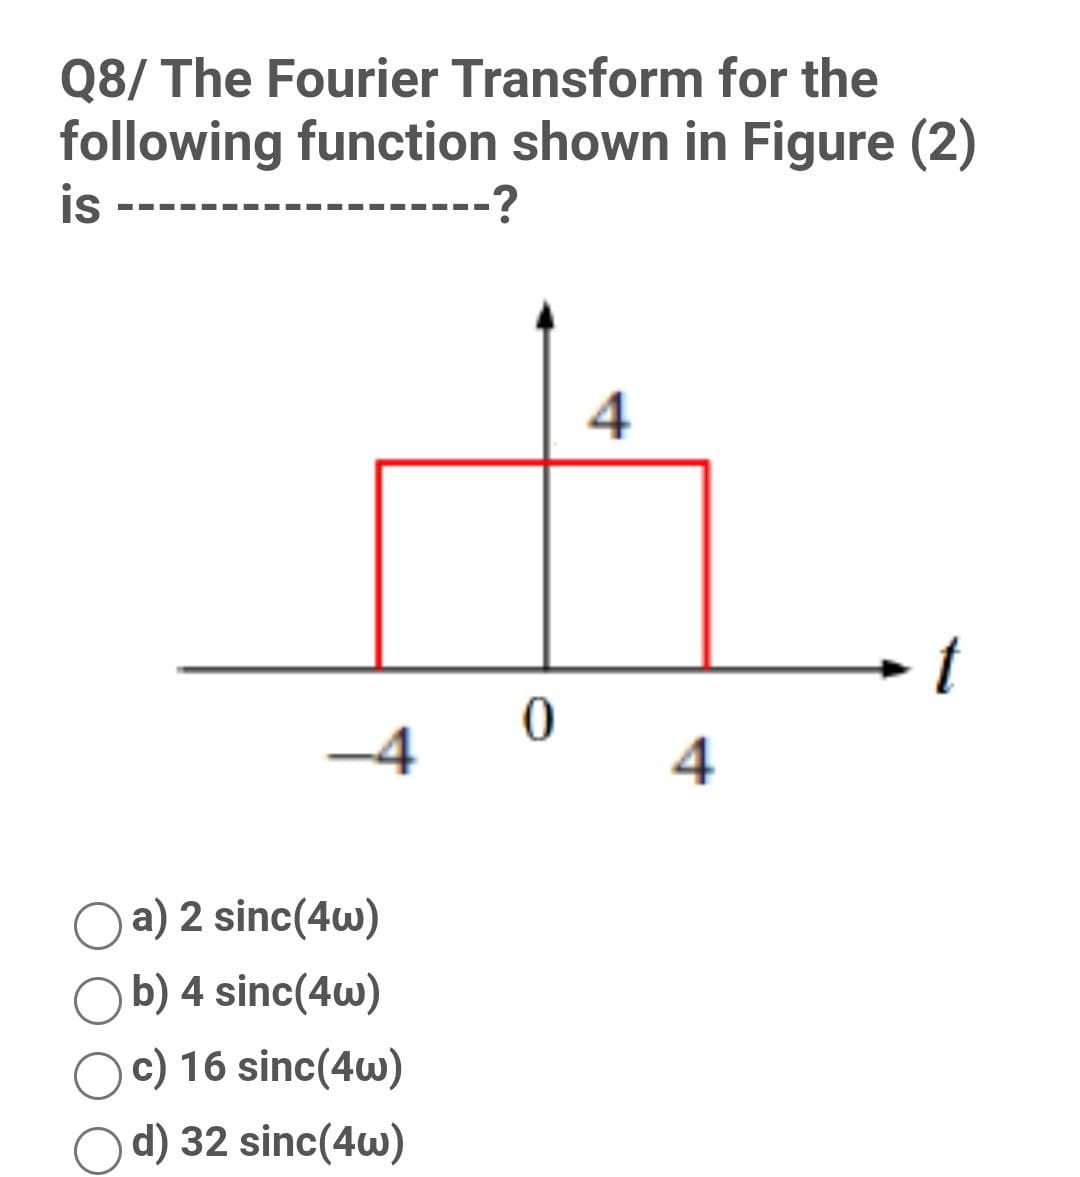 Q8/ The Fourier Transform for the
following function shown in Figure (2)
is
--?
-4
4
a) 2 sinc(4w)
b) 4 sinc(4w)
c) 16 sinc(4w)
d) 32 sinc(4w)
